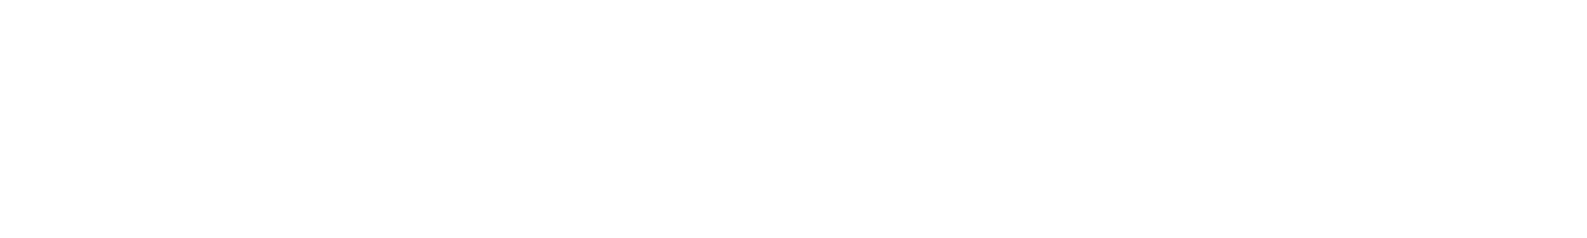 Stagwell Logo groß für dunkle Hintergründe (transparentes PNG)